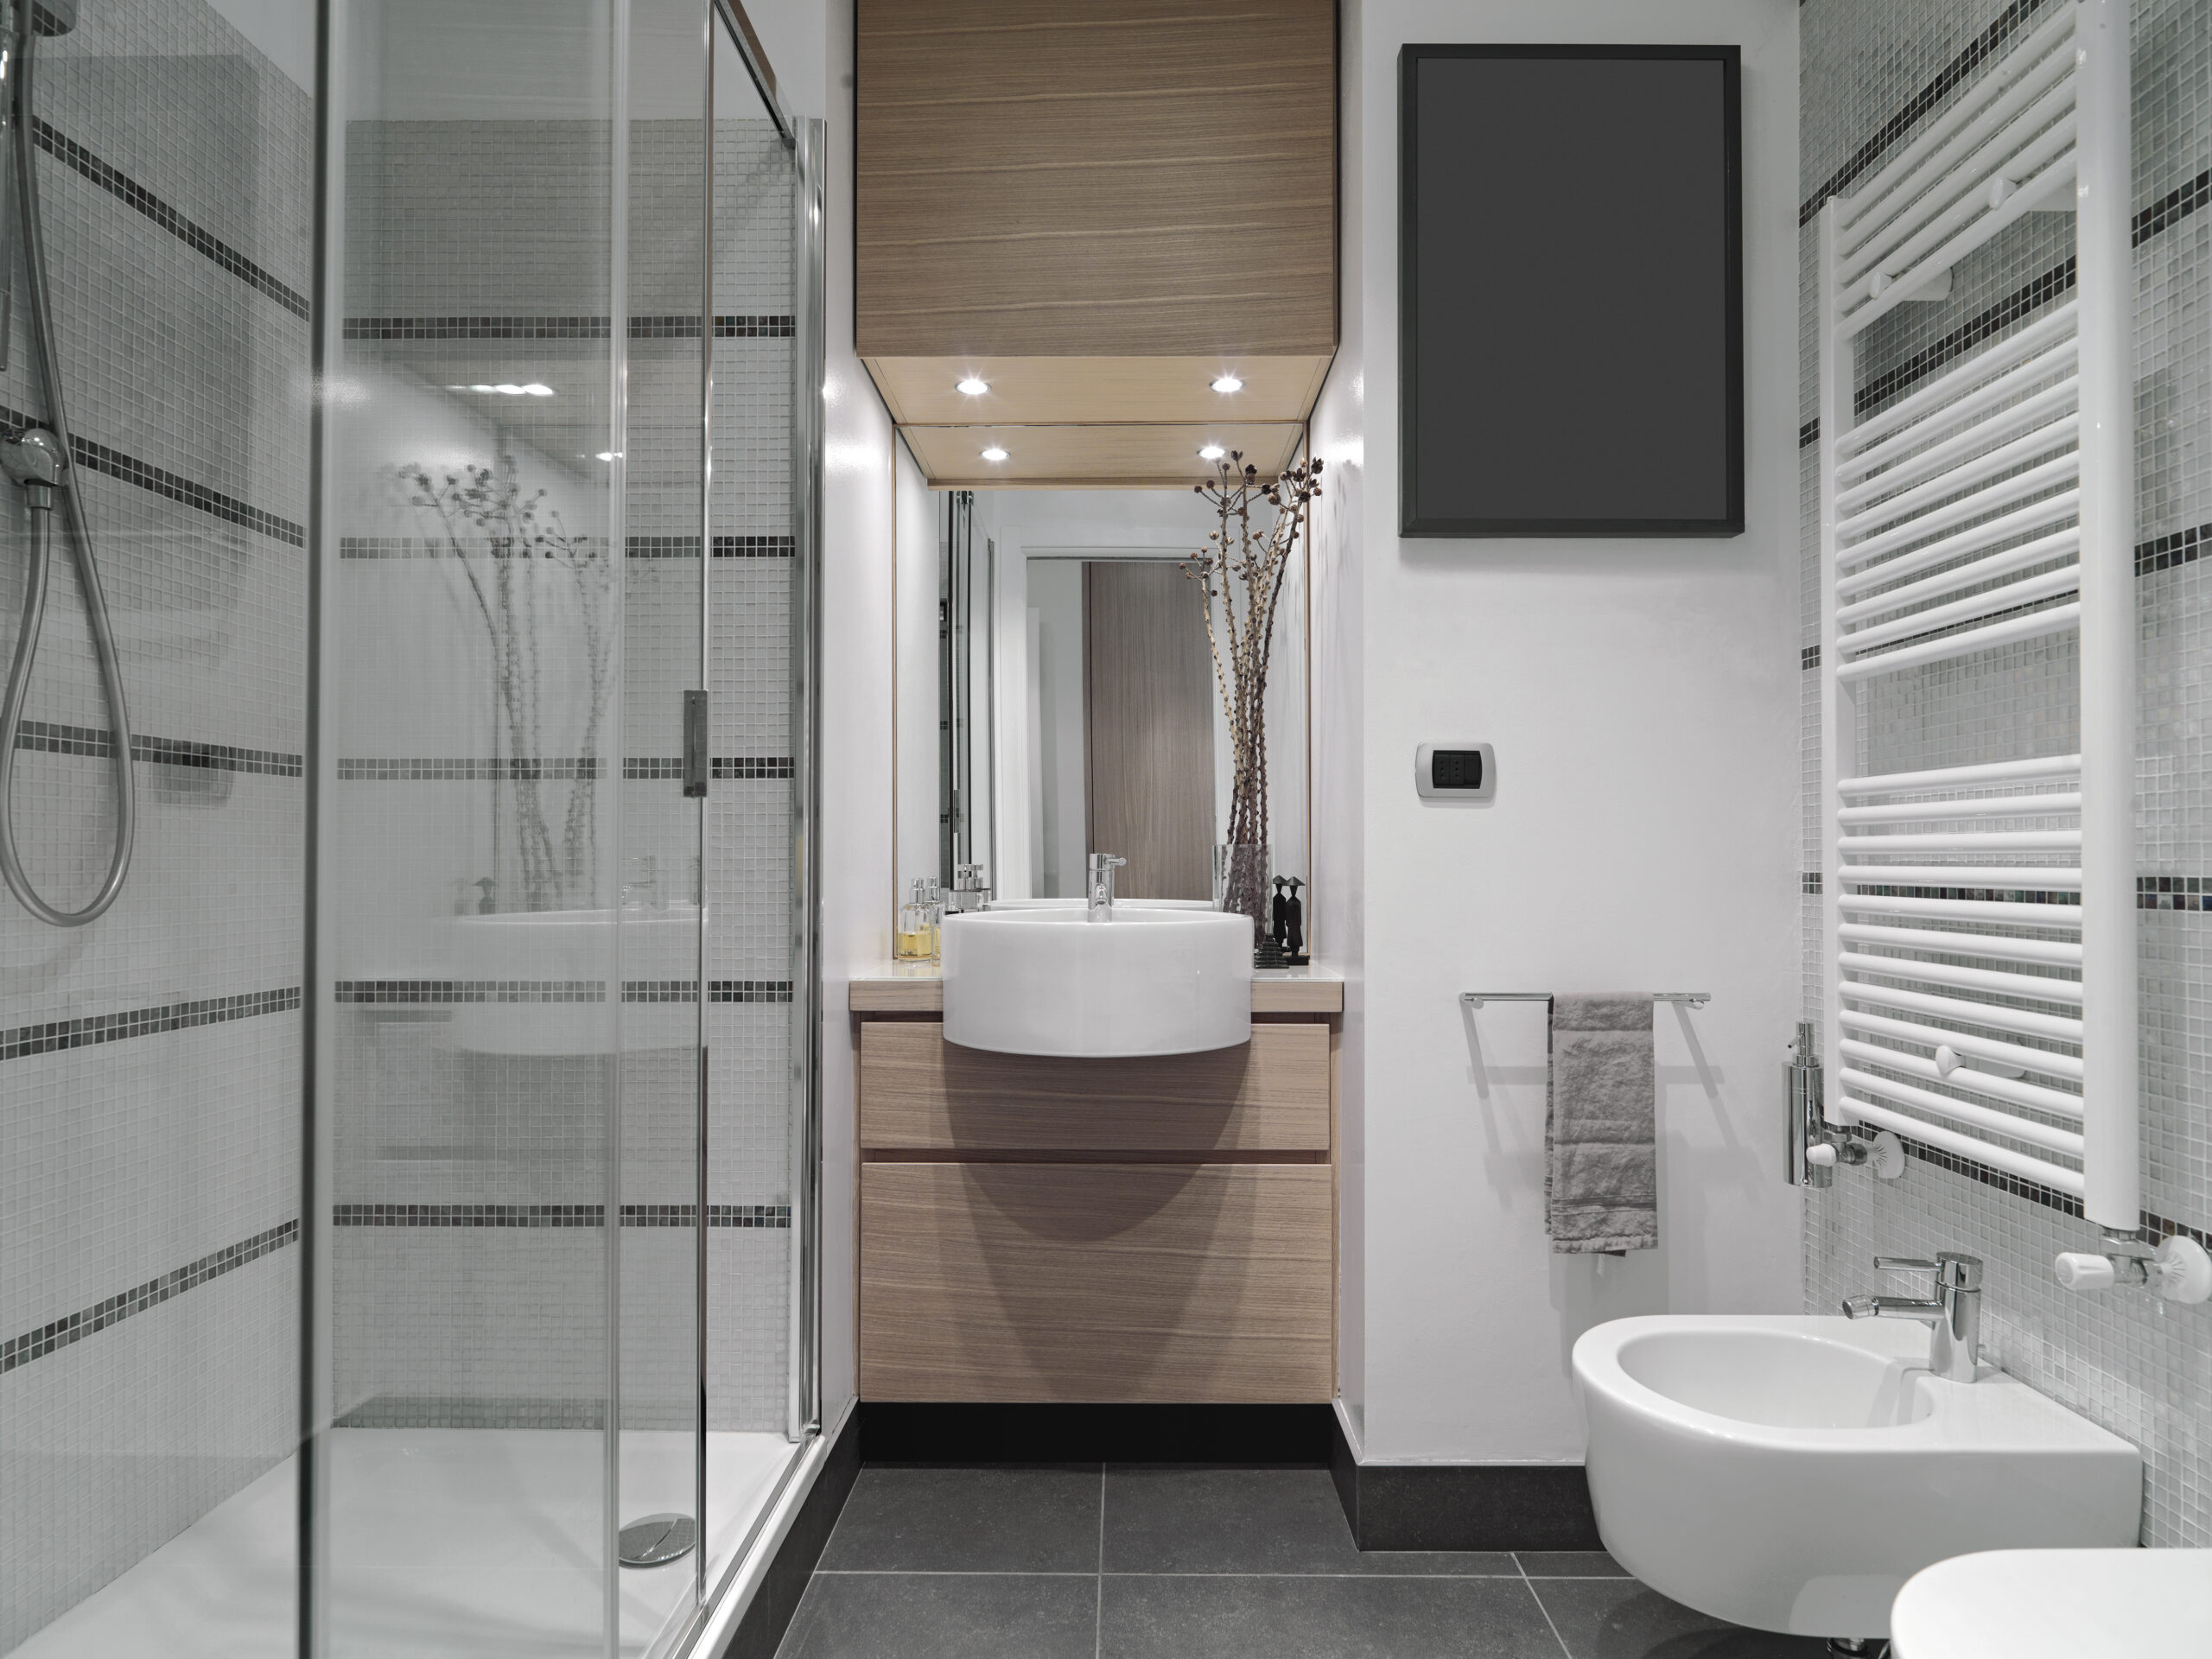 4 ideas para decorar baños con estilo moderno